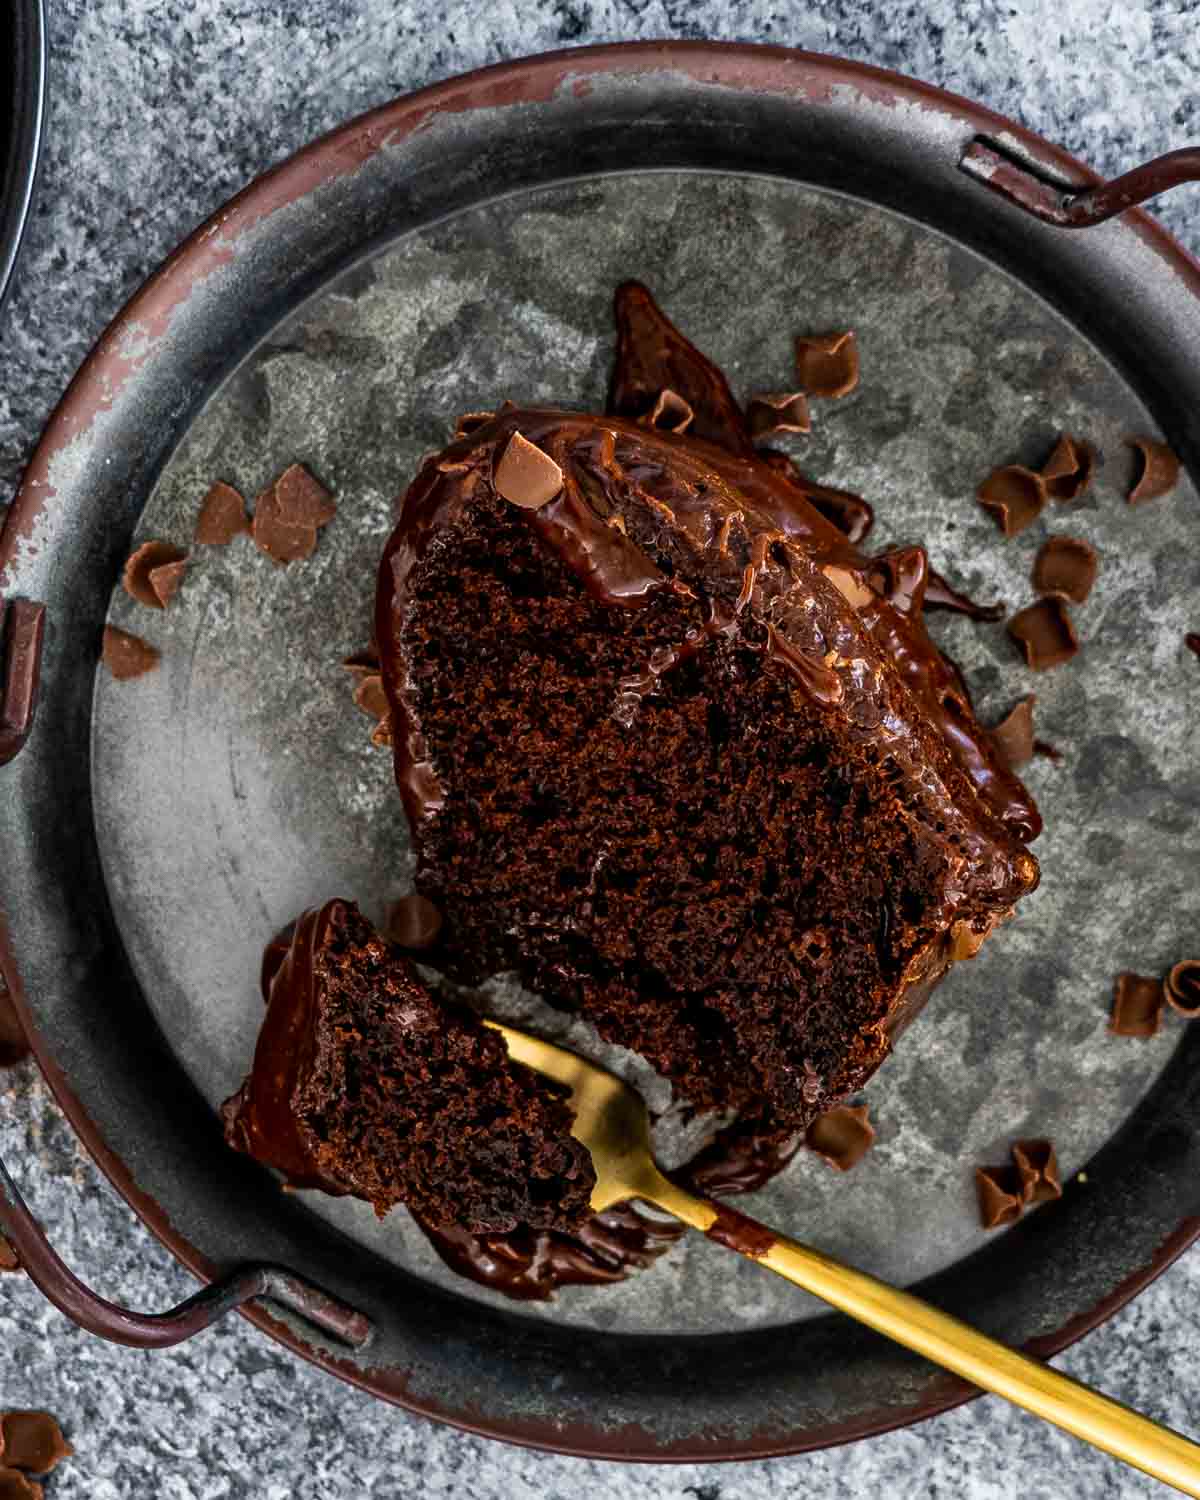 a slice of chocolate bundt cake with chocolate ganache and chocolate shavings.